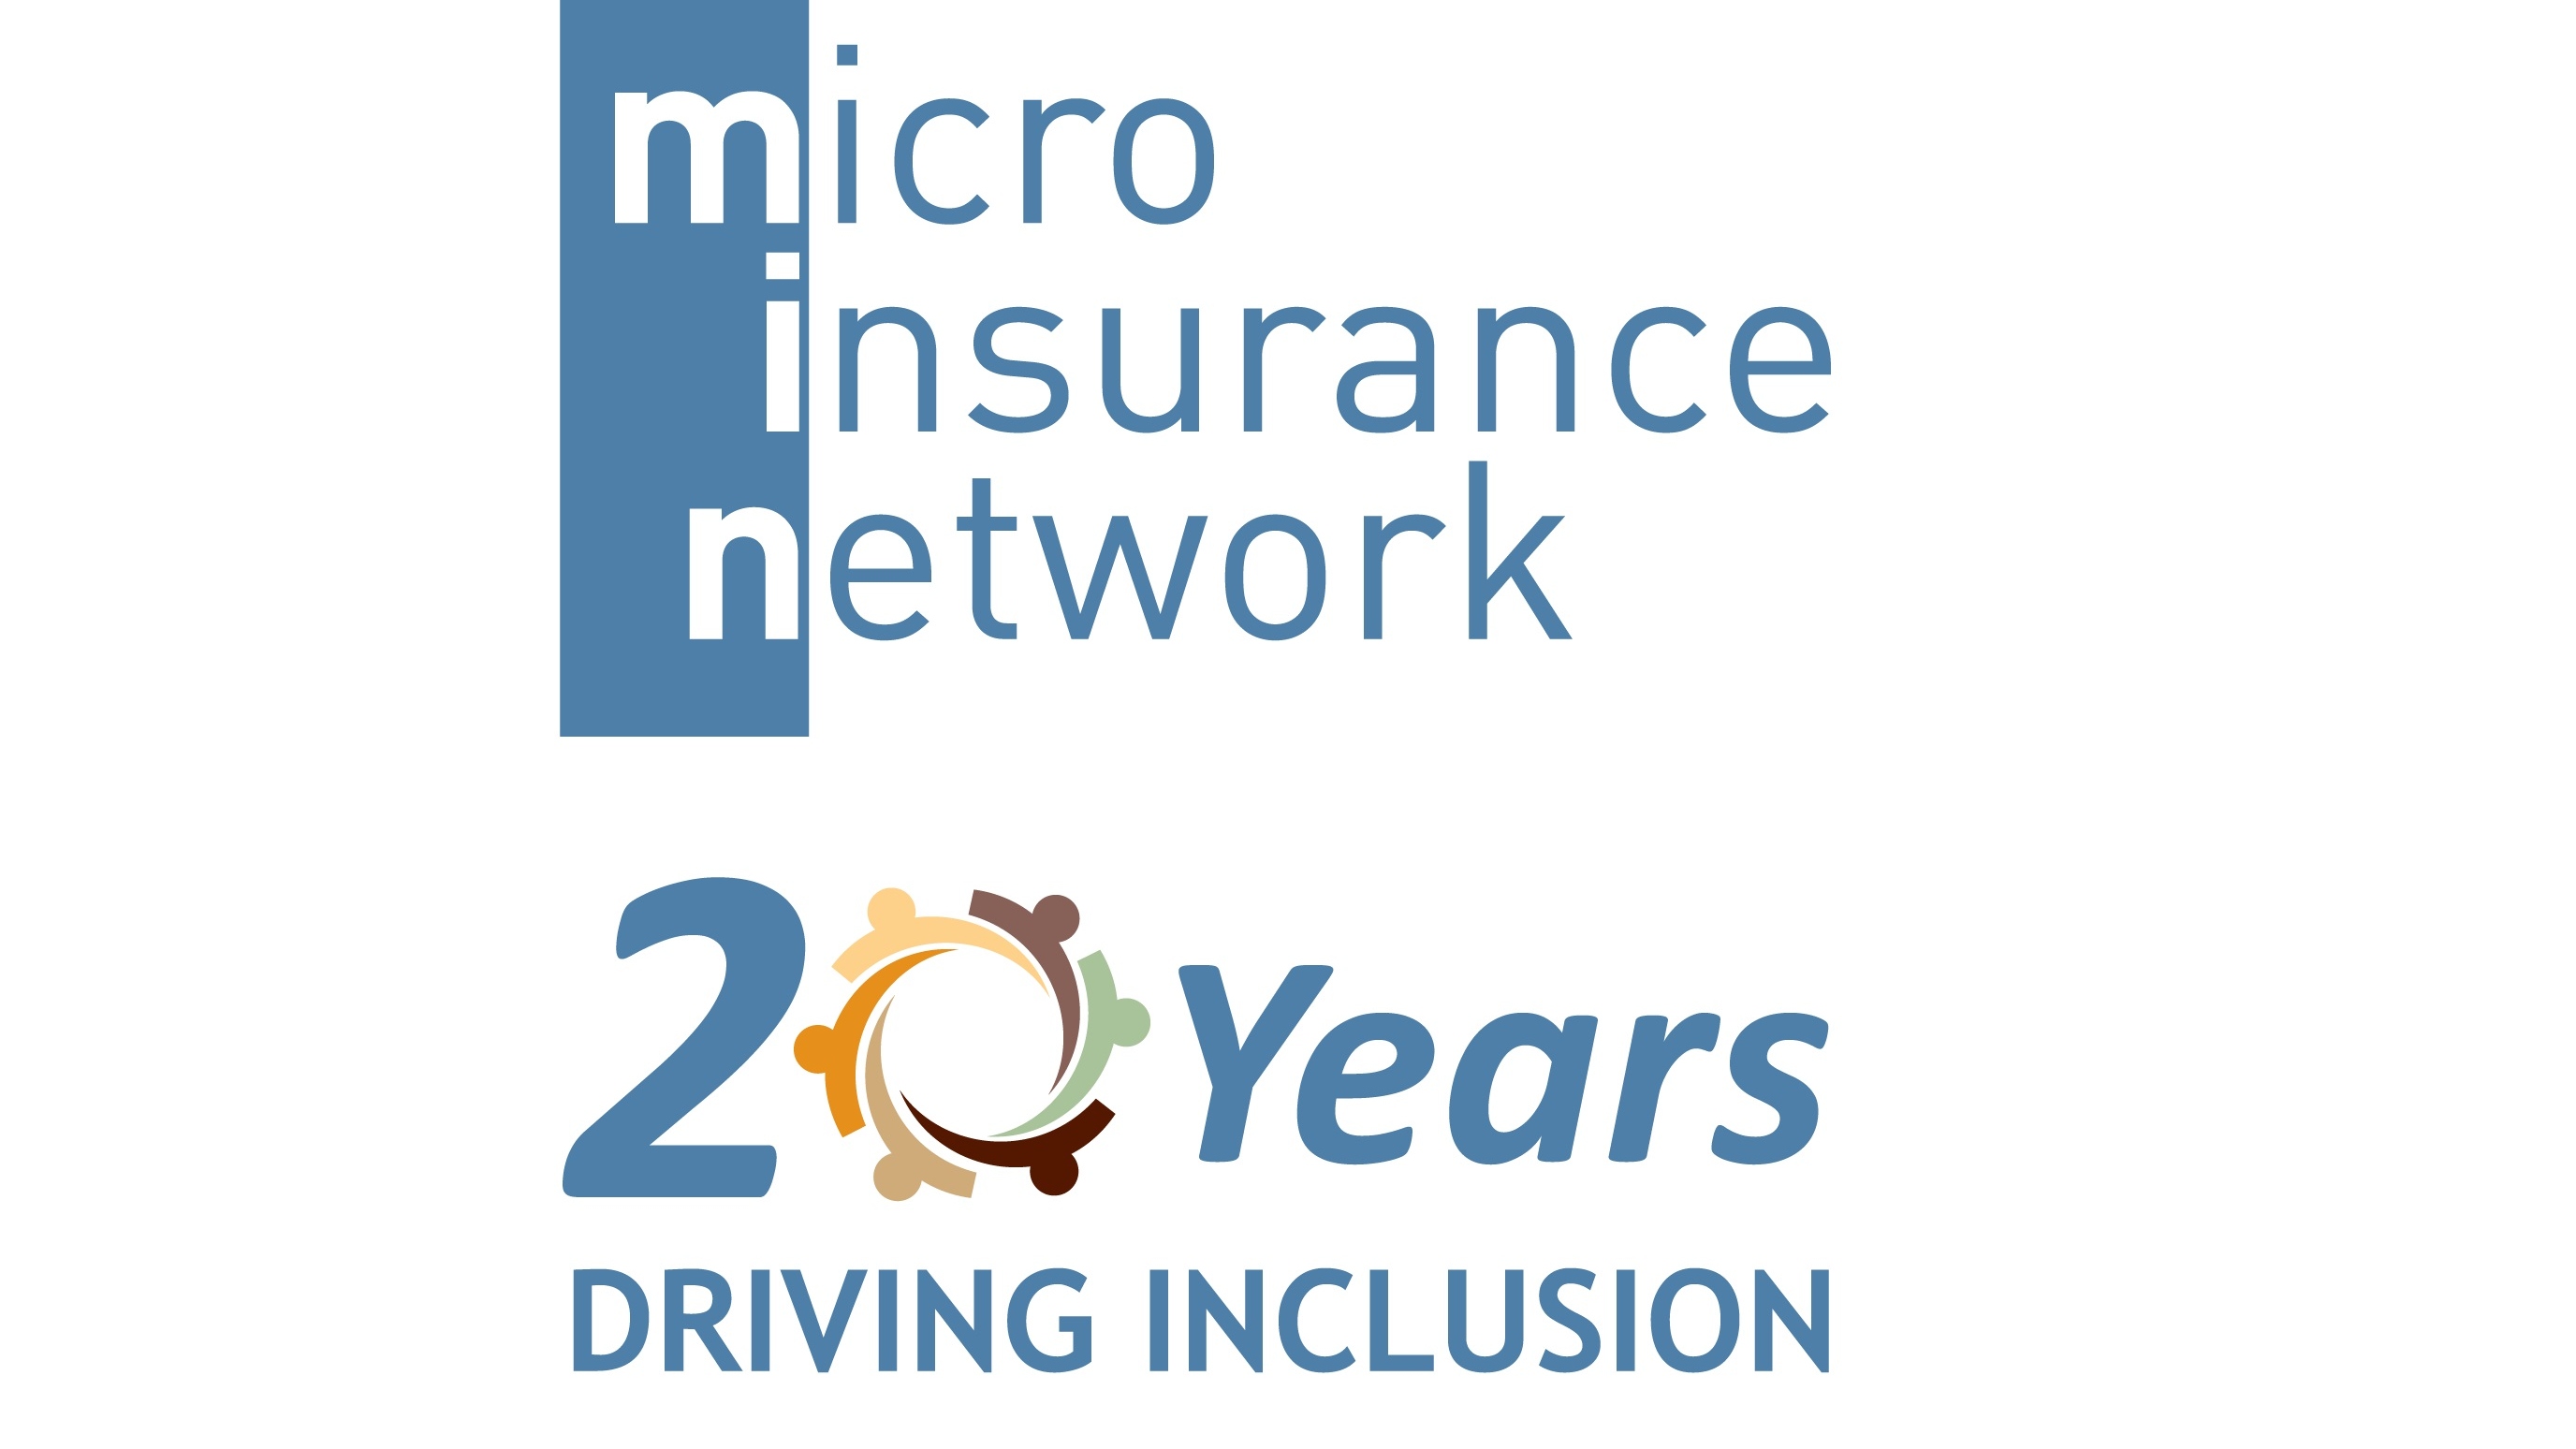 Microinsurance Network